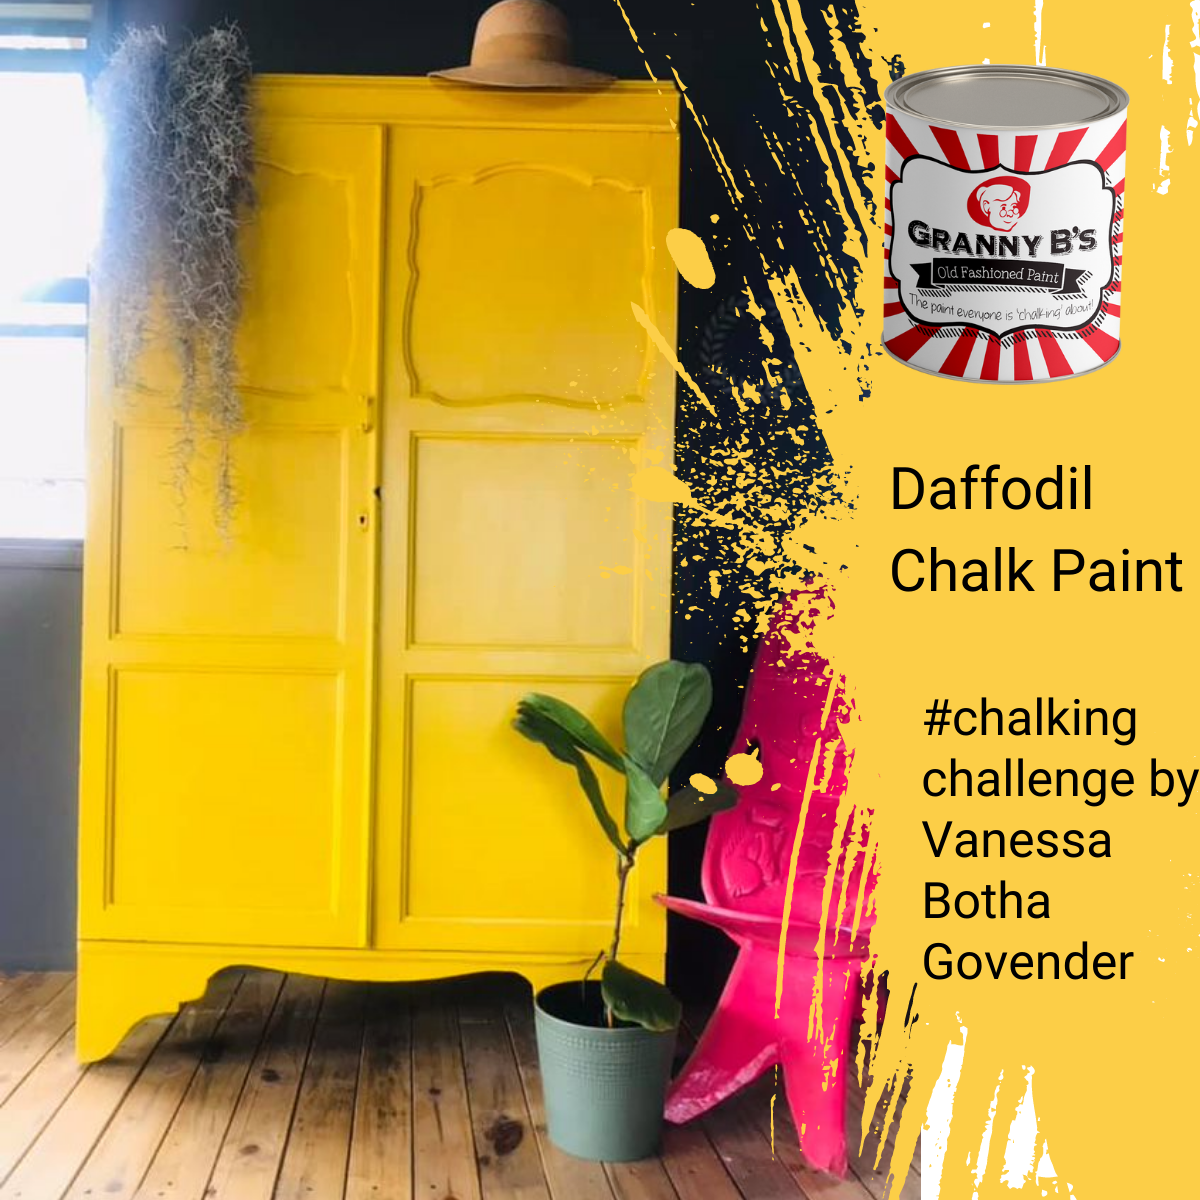 Chalkpaint - Daffodil (Golden Yellow)